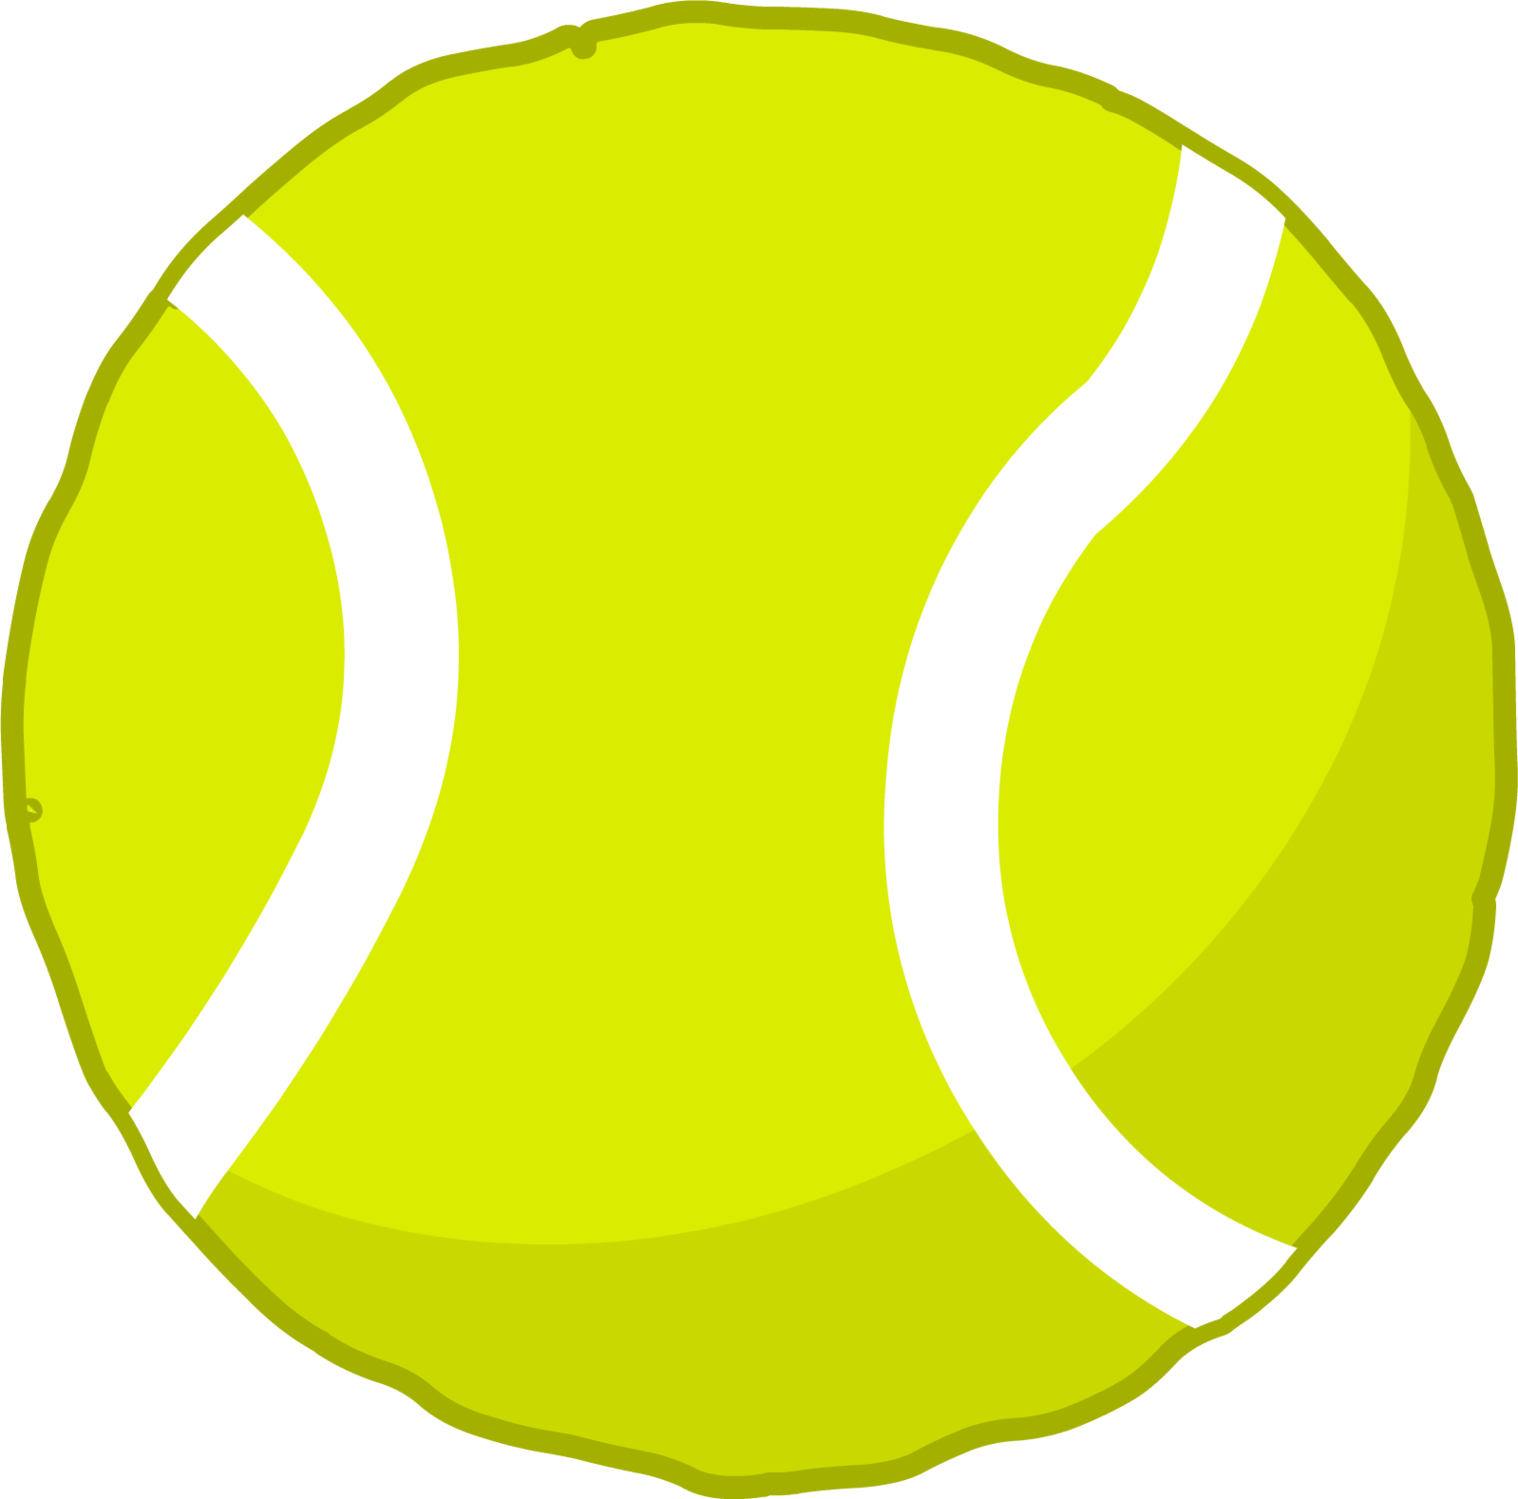 Free tennis ball clipart - Clipartix